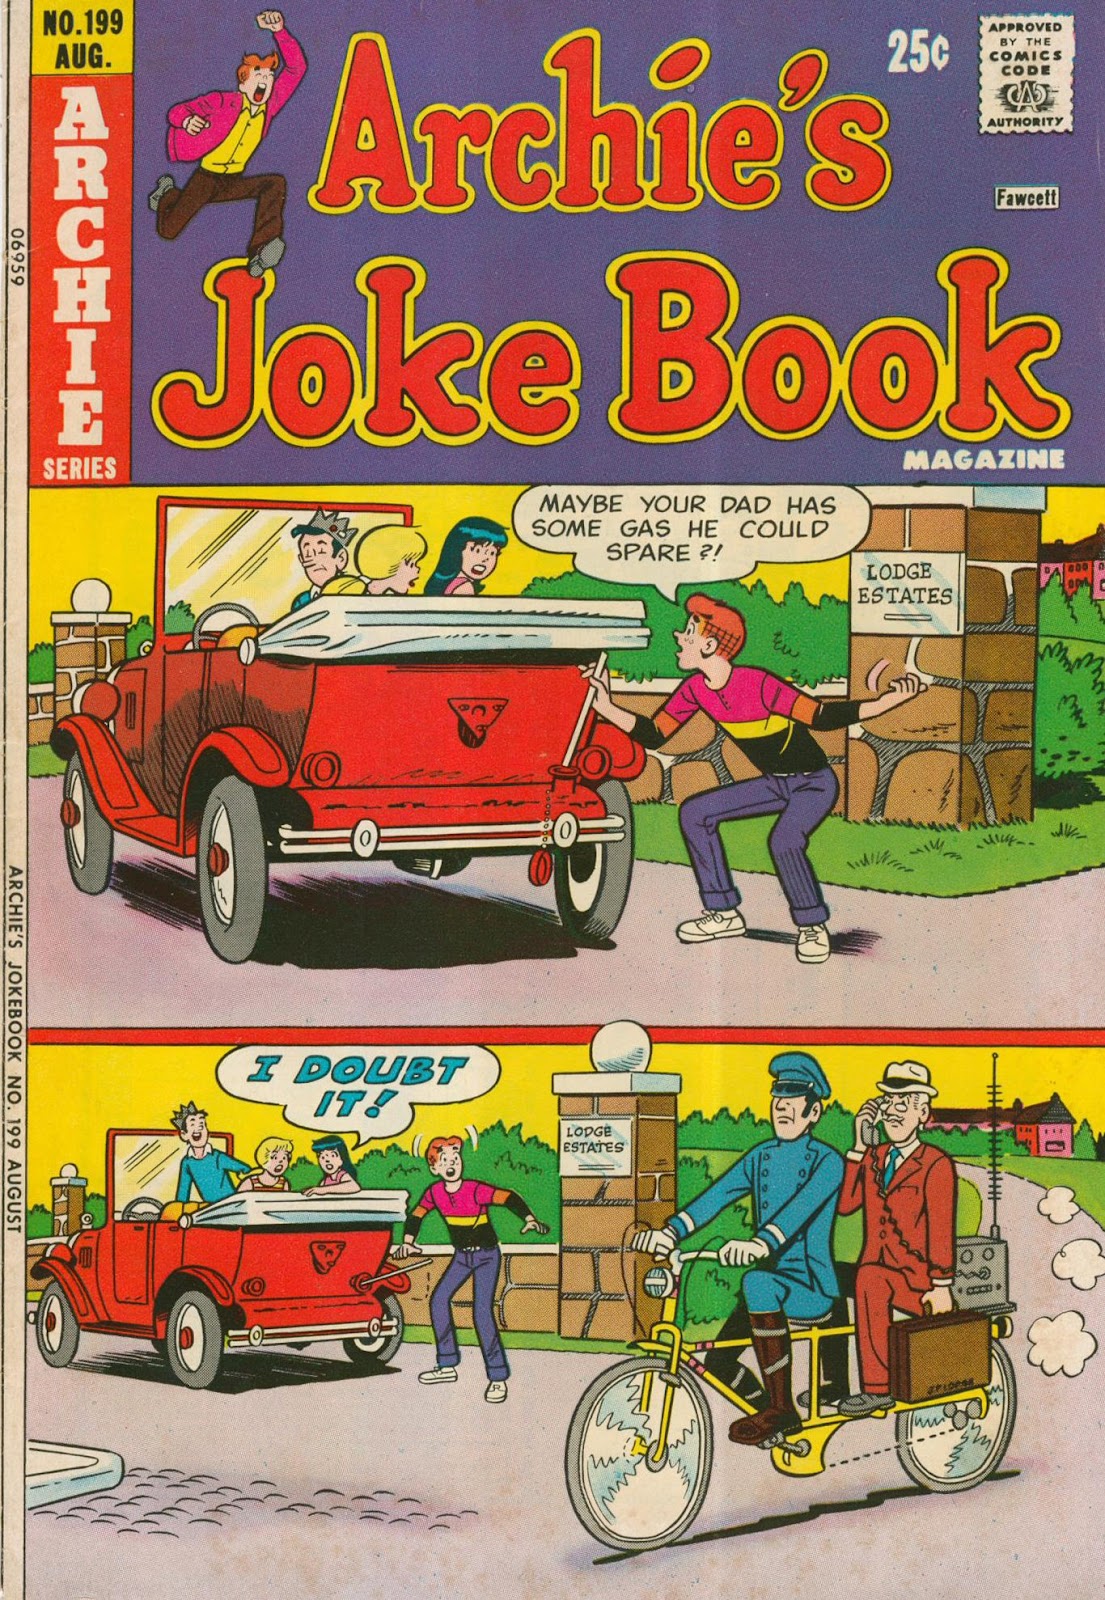 Archie's Joke Book Magazine 199 Page 1